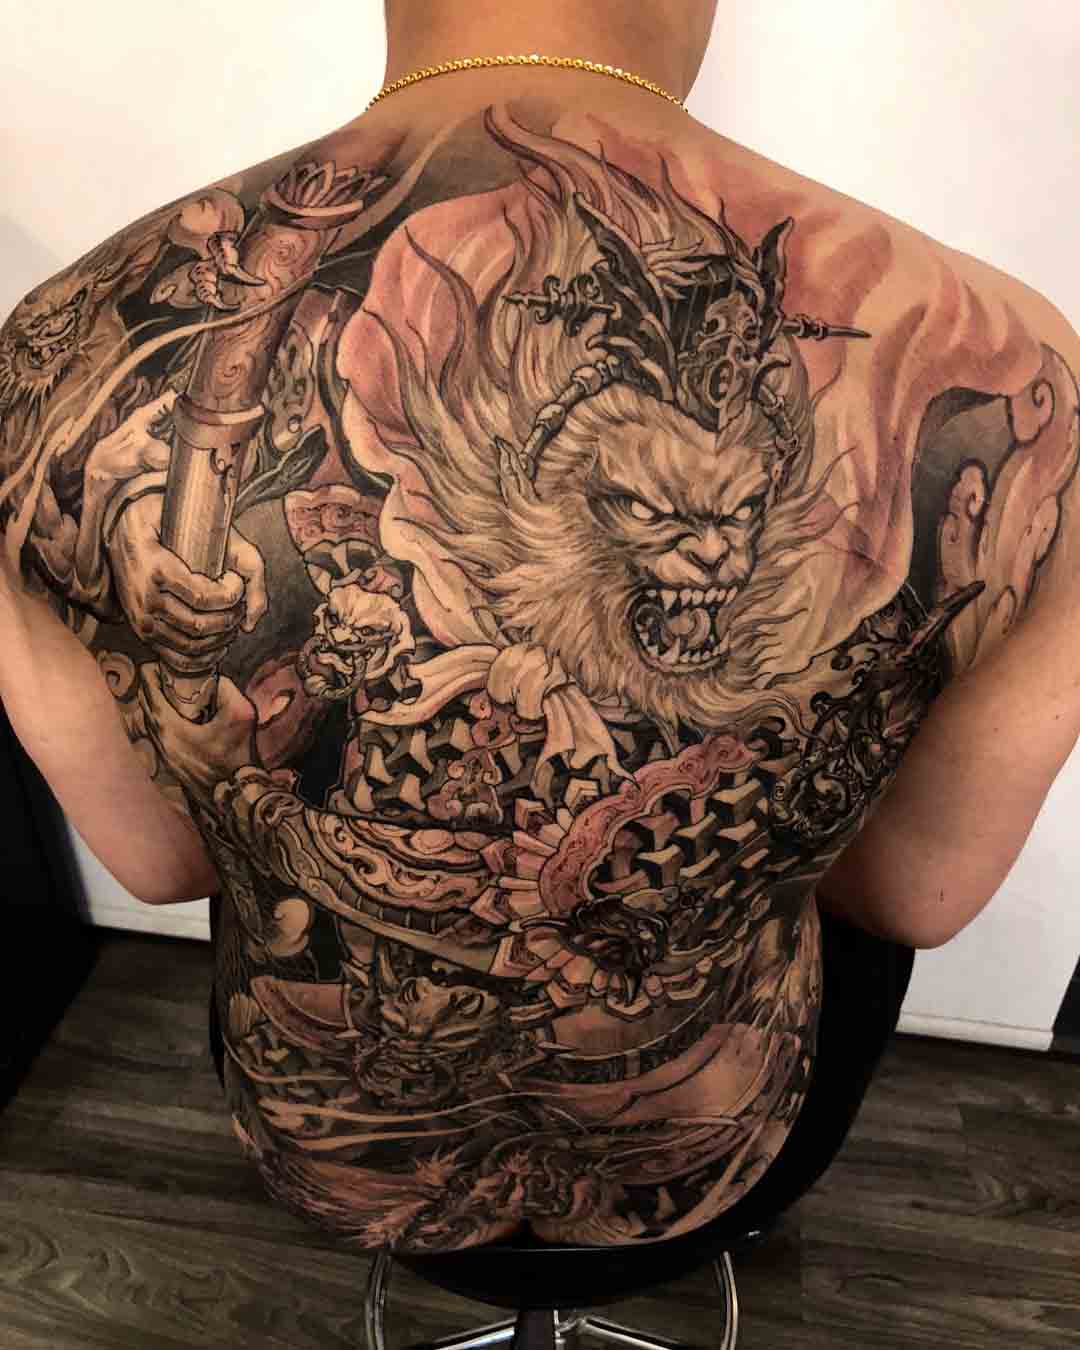 Monkey King Tattoo on Back - Best Tattoo Ideas Gallery